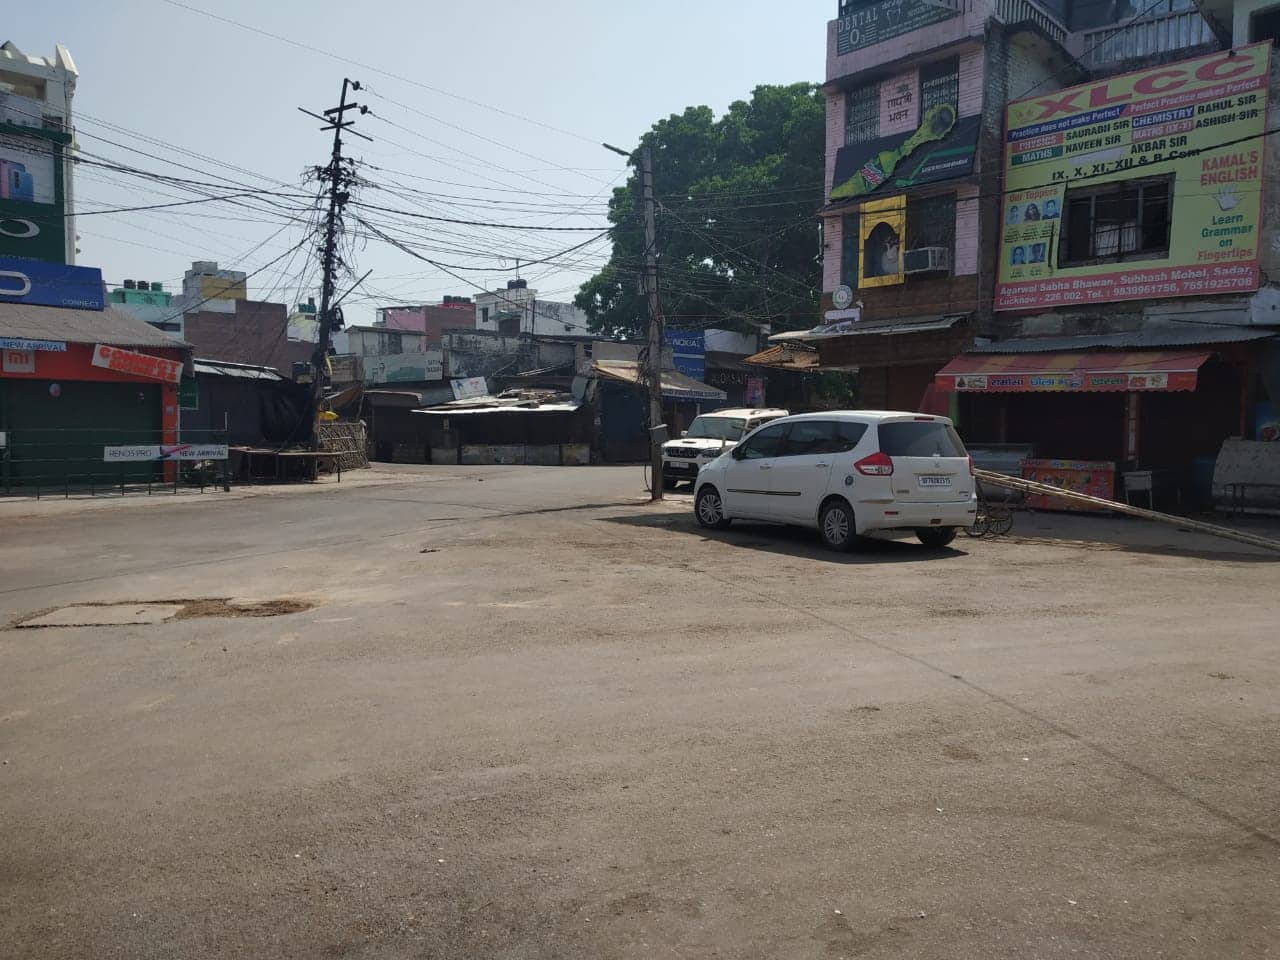 Sadar Bazar lockdown in Lucknow, UP